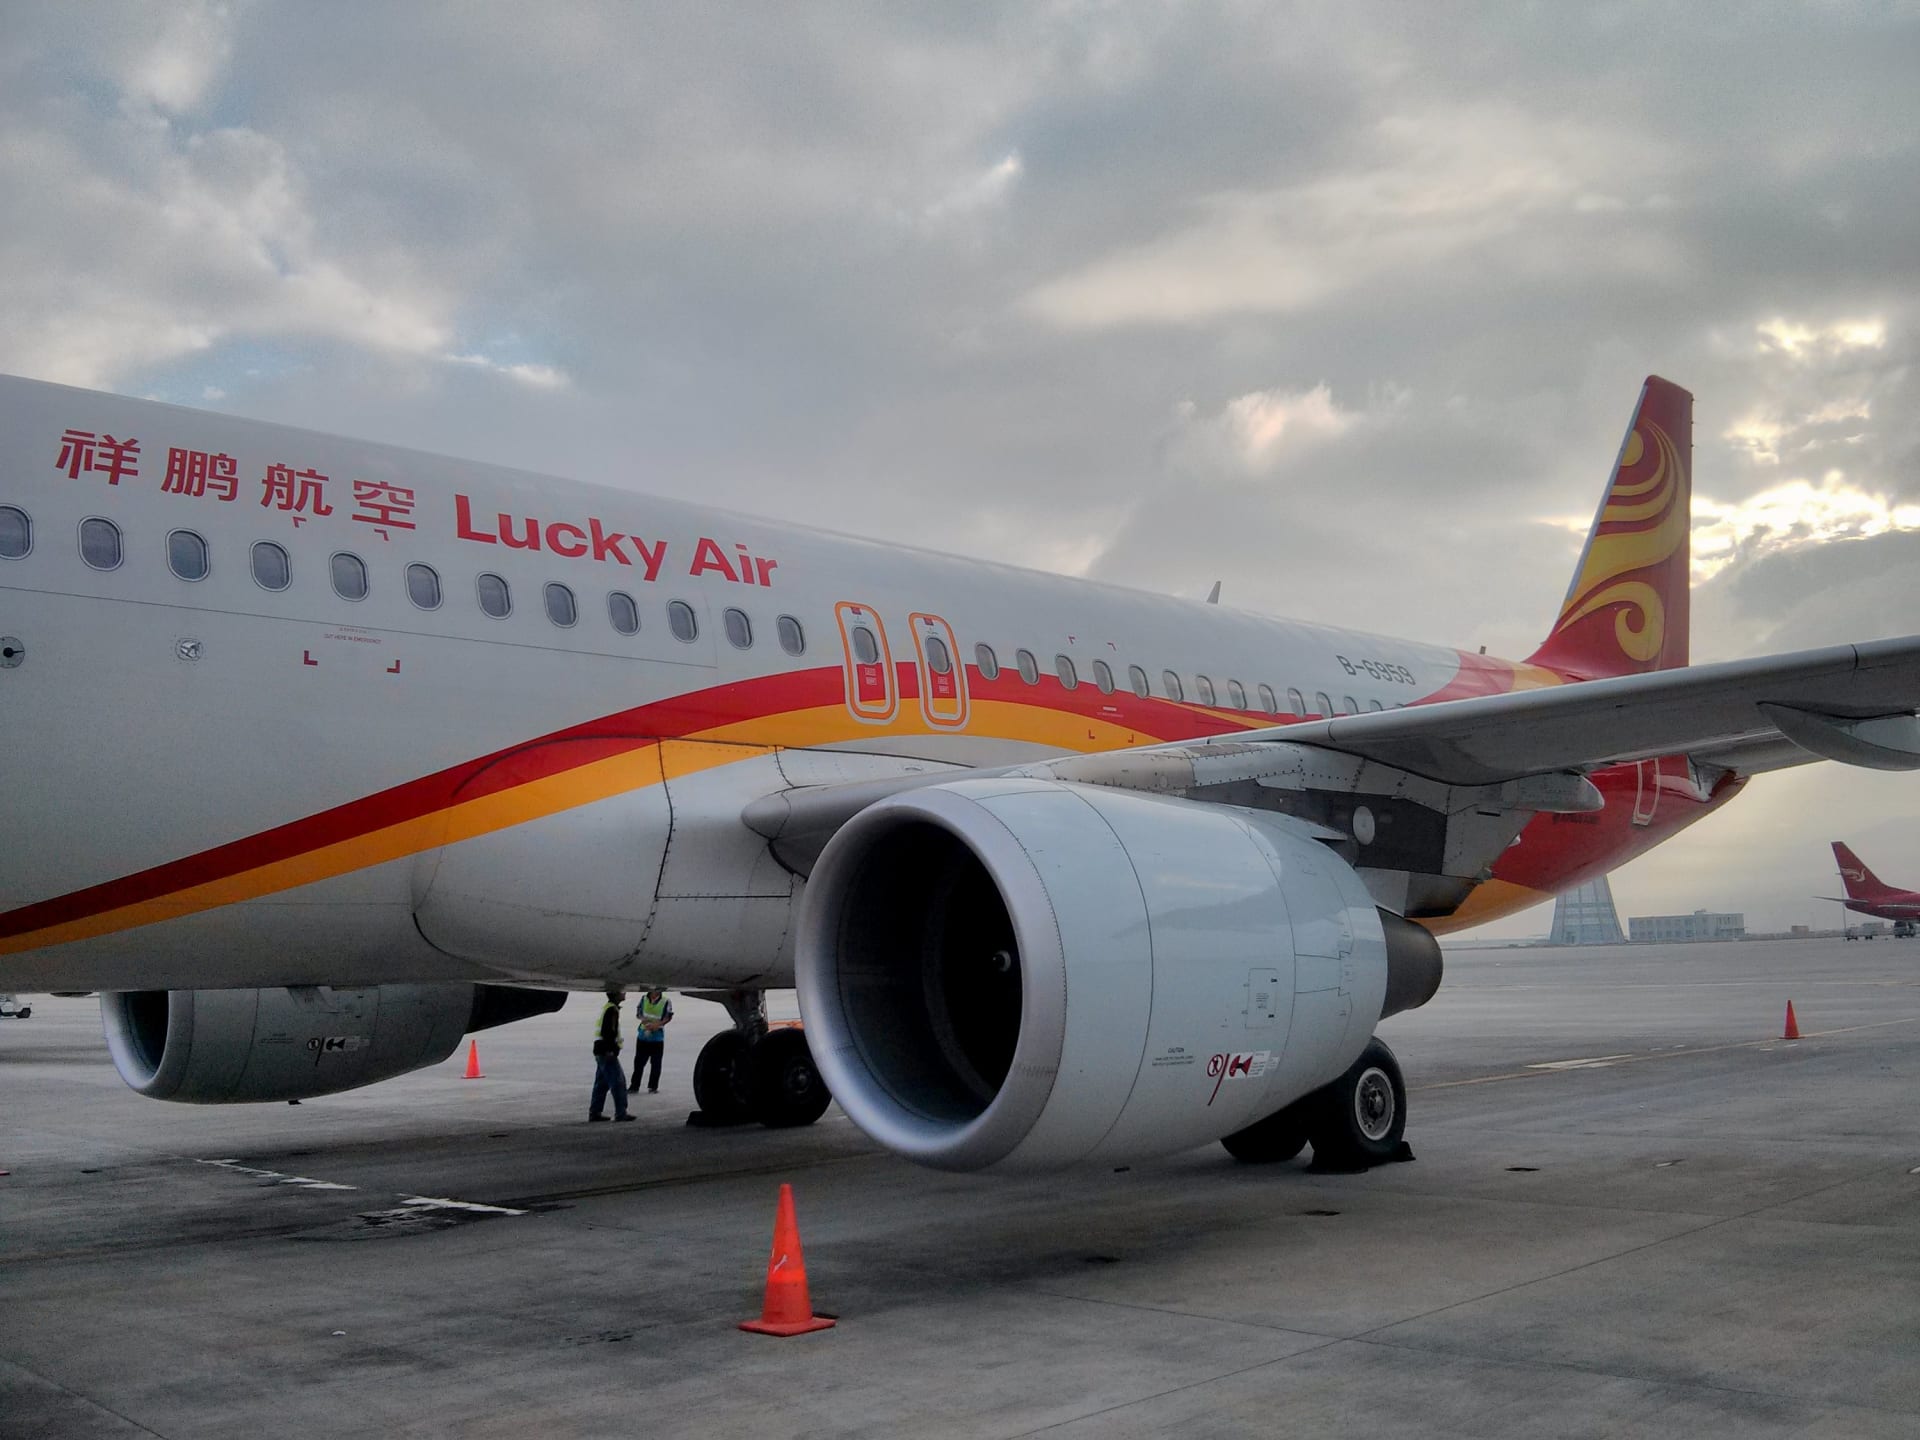 Letadlo společnosti Lucky Air